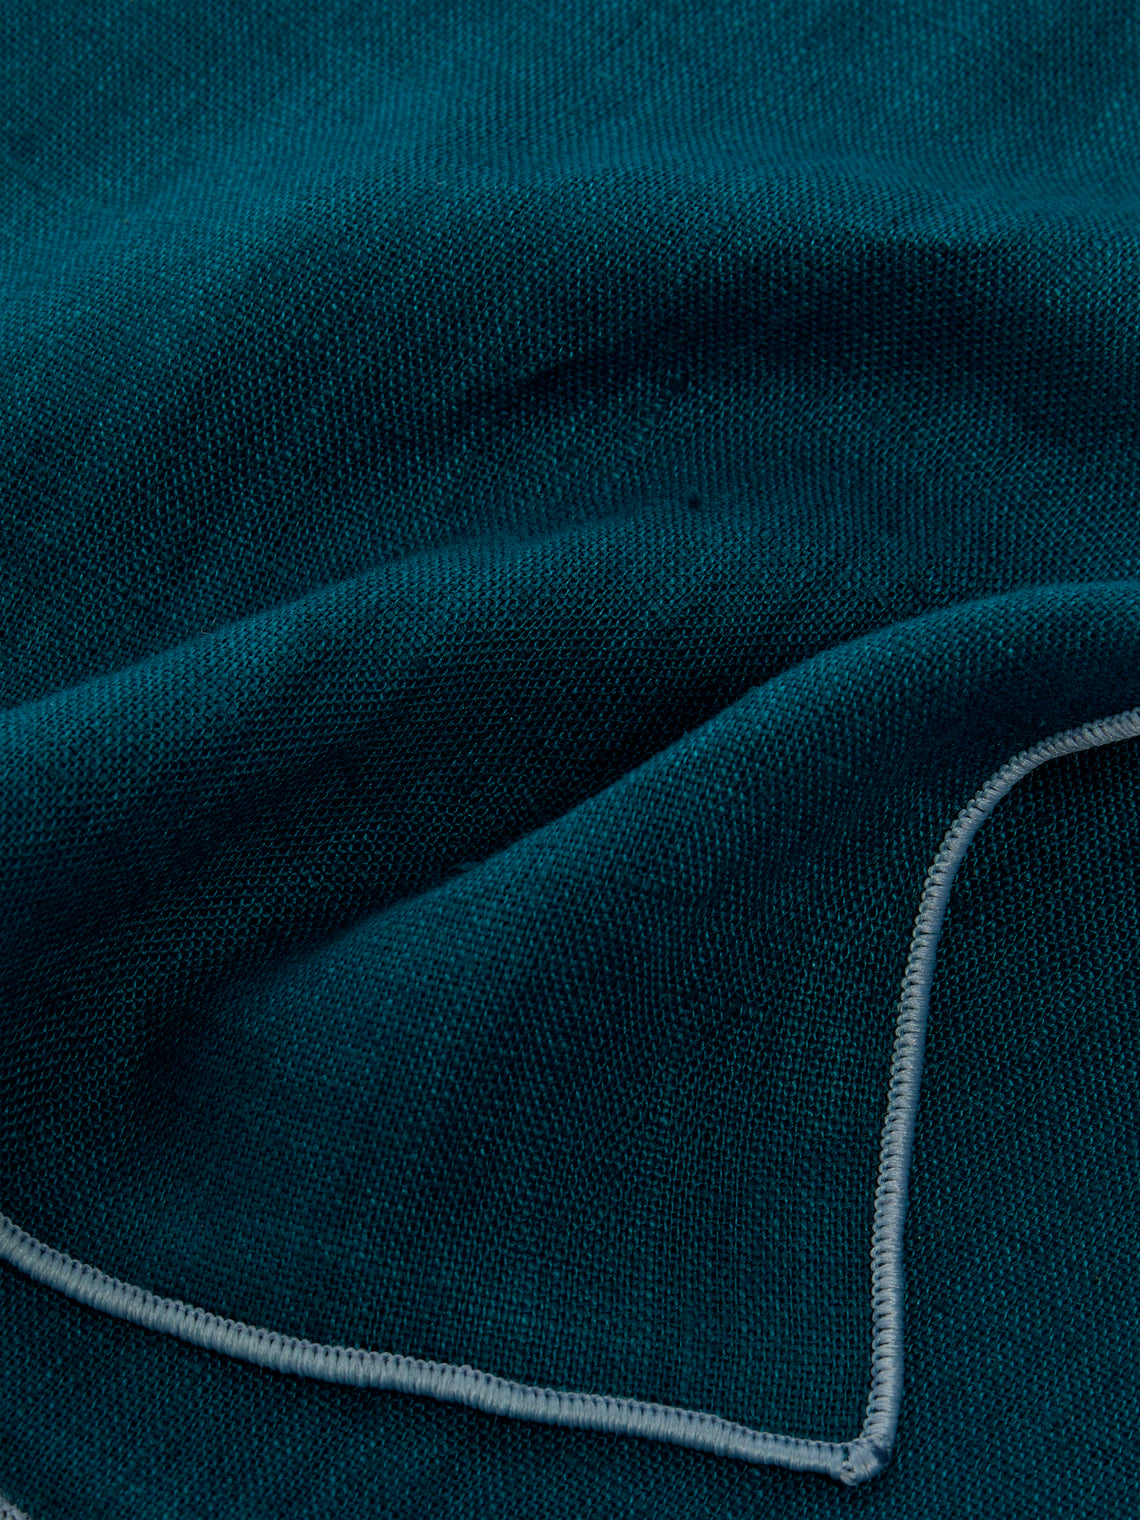 Madre Linen - Contrast Edge Linen Napkin (Set of 4) - Blue - ABASK